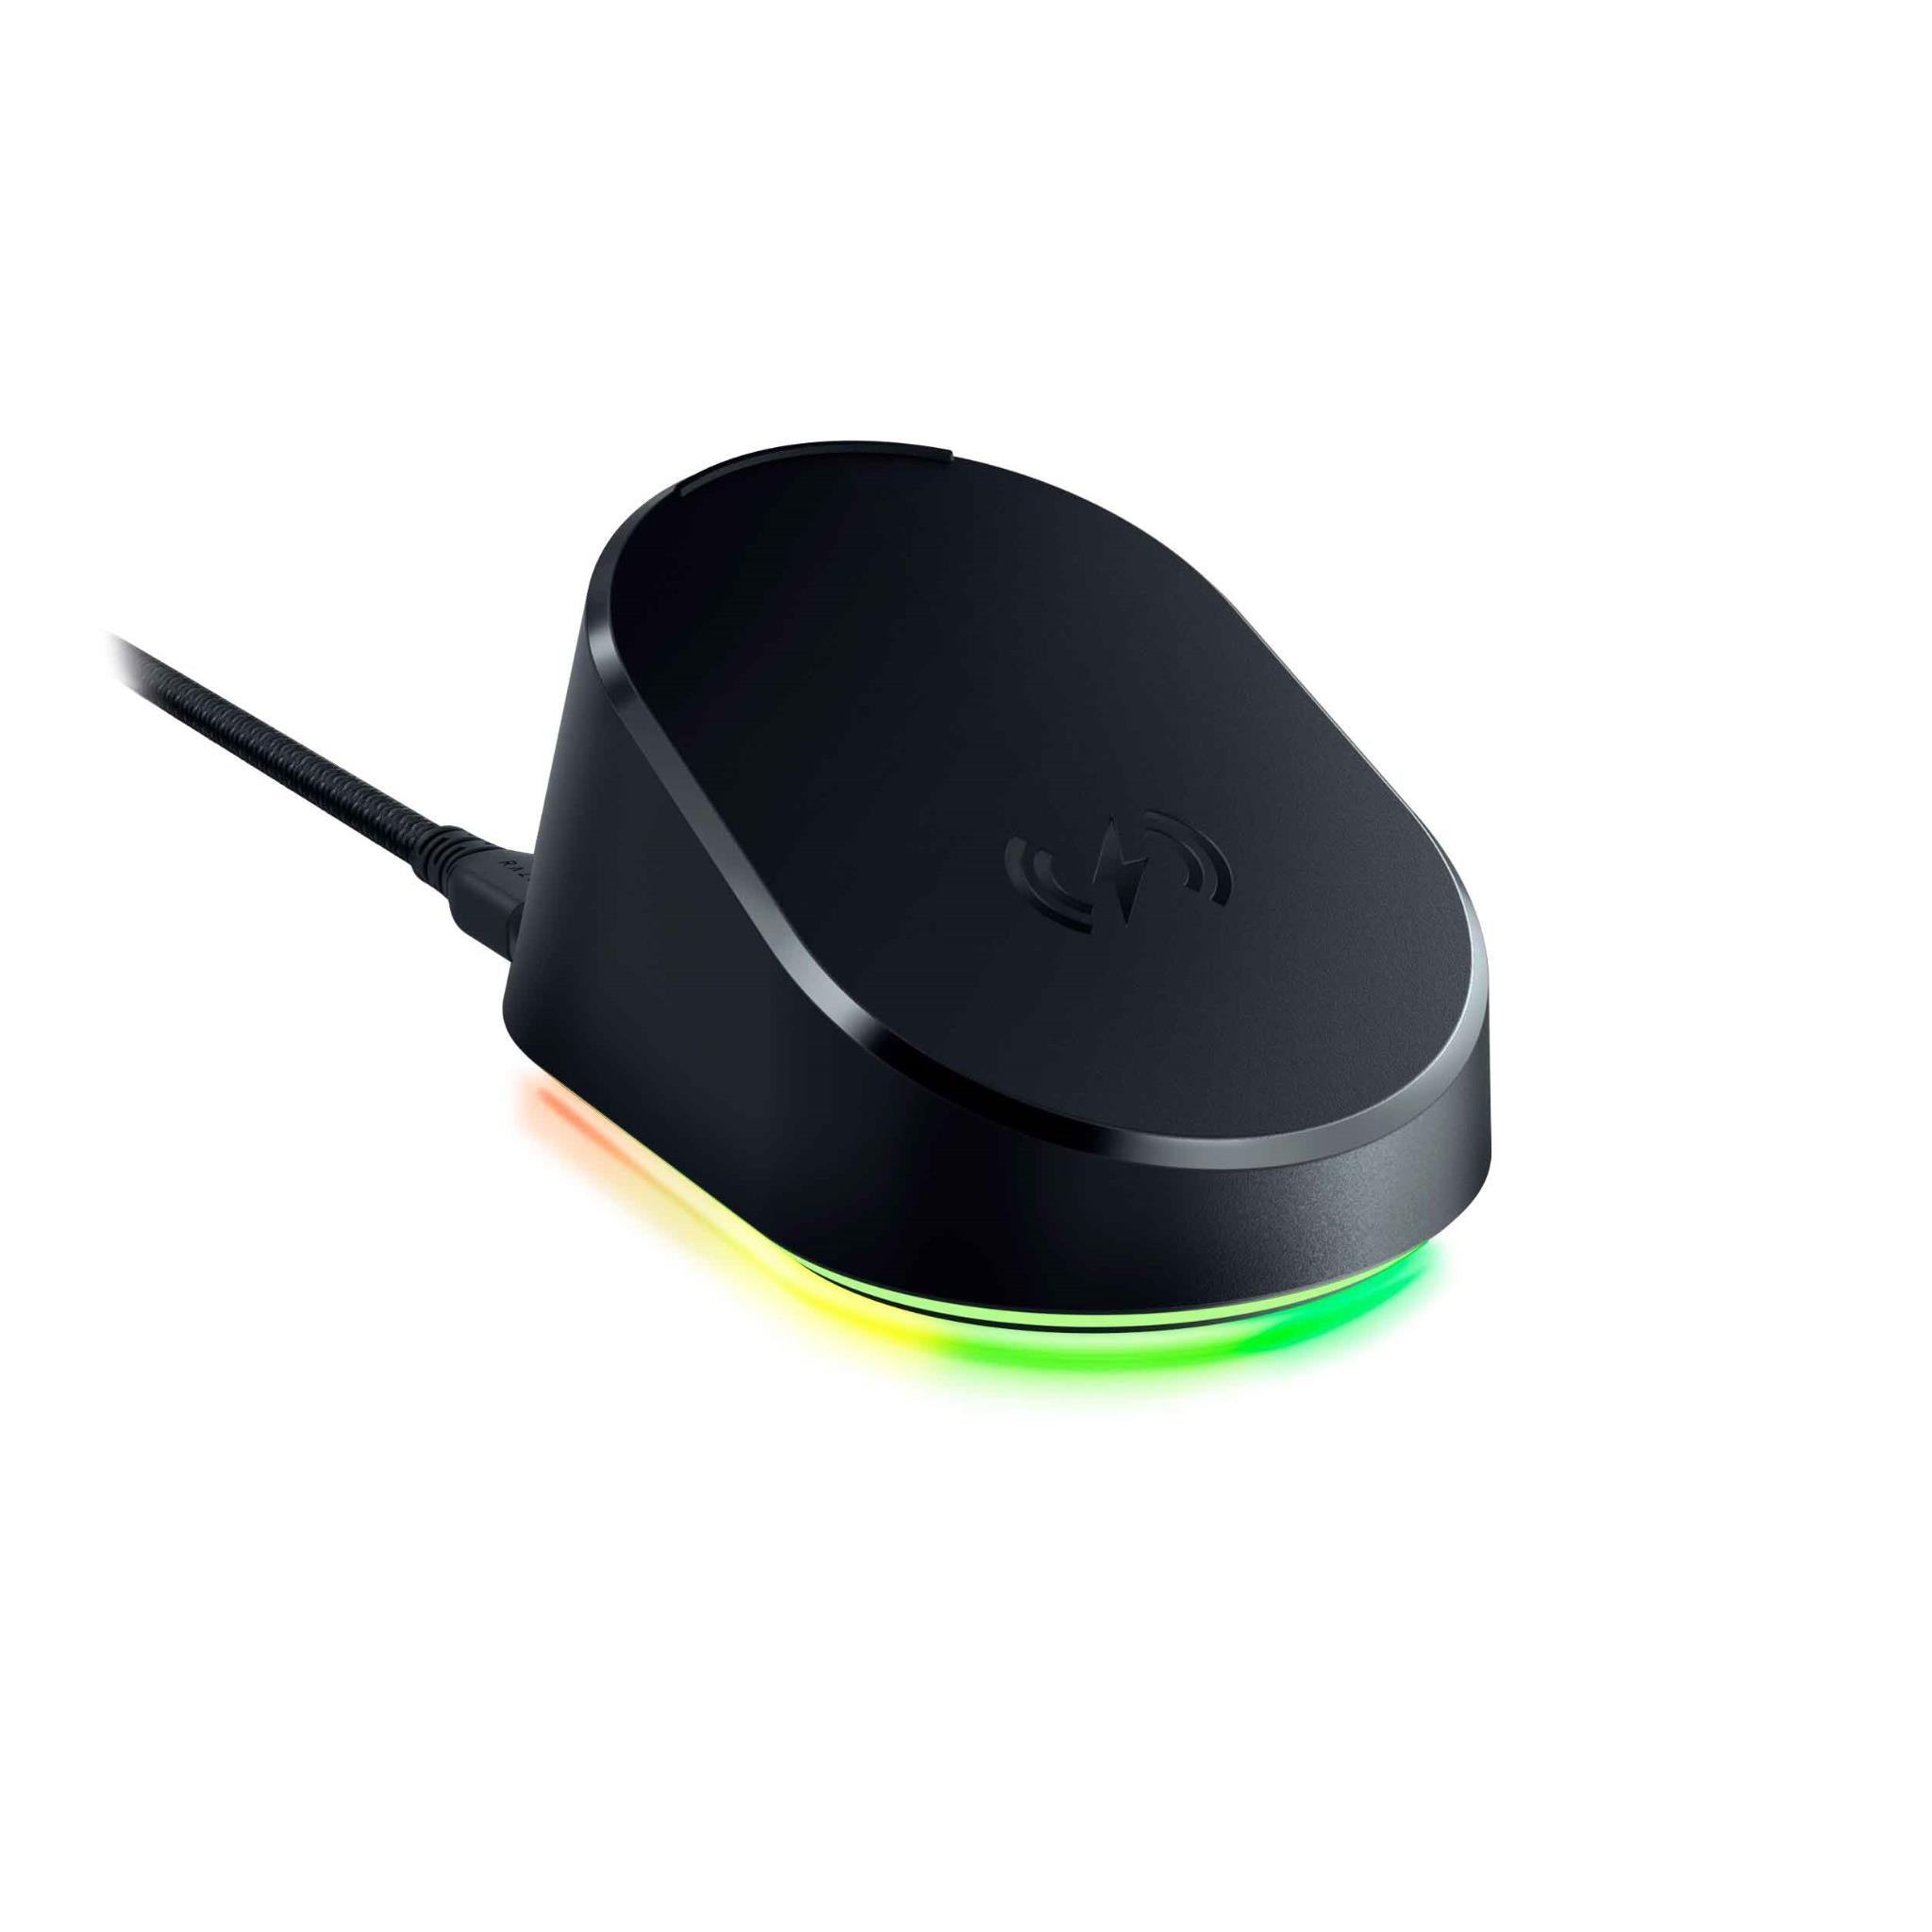  Razer Naga Pro Gaming Mouse + Free Mouse Charging Dock